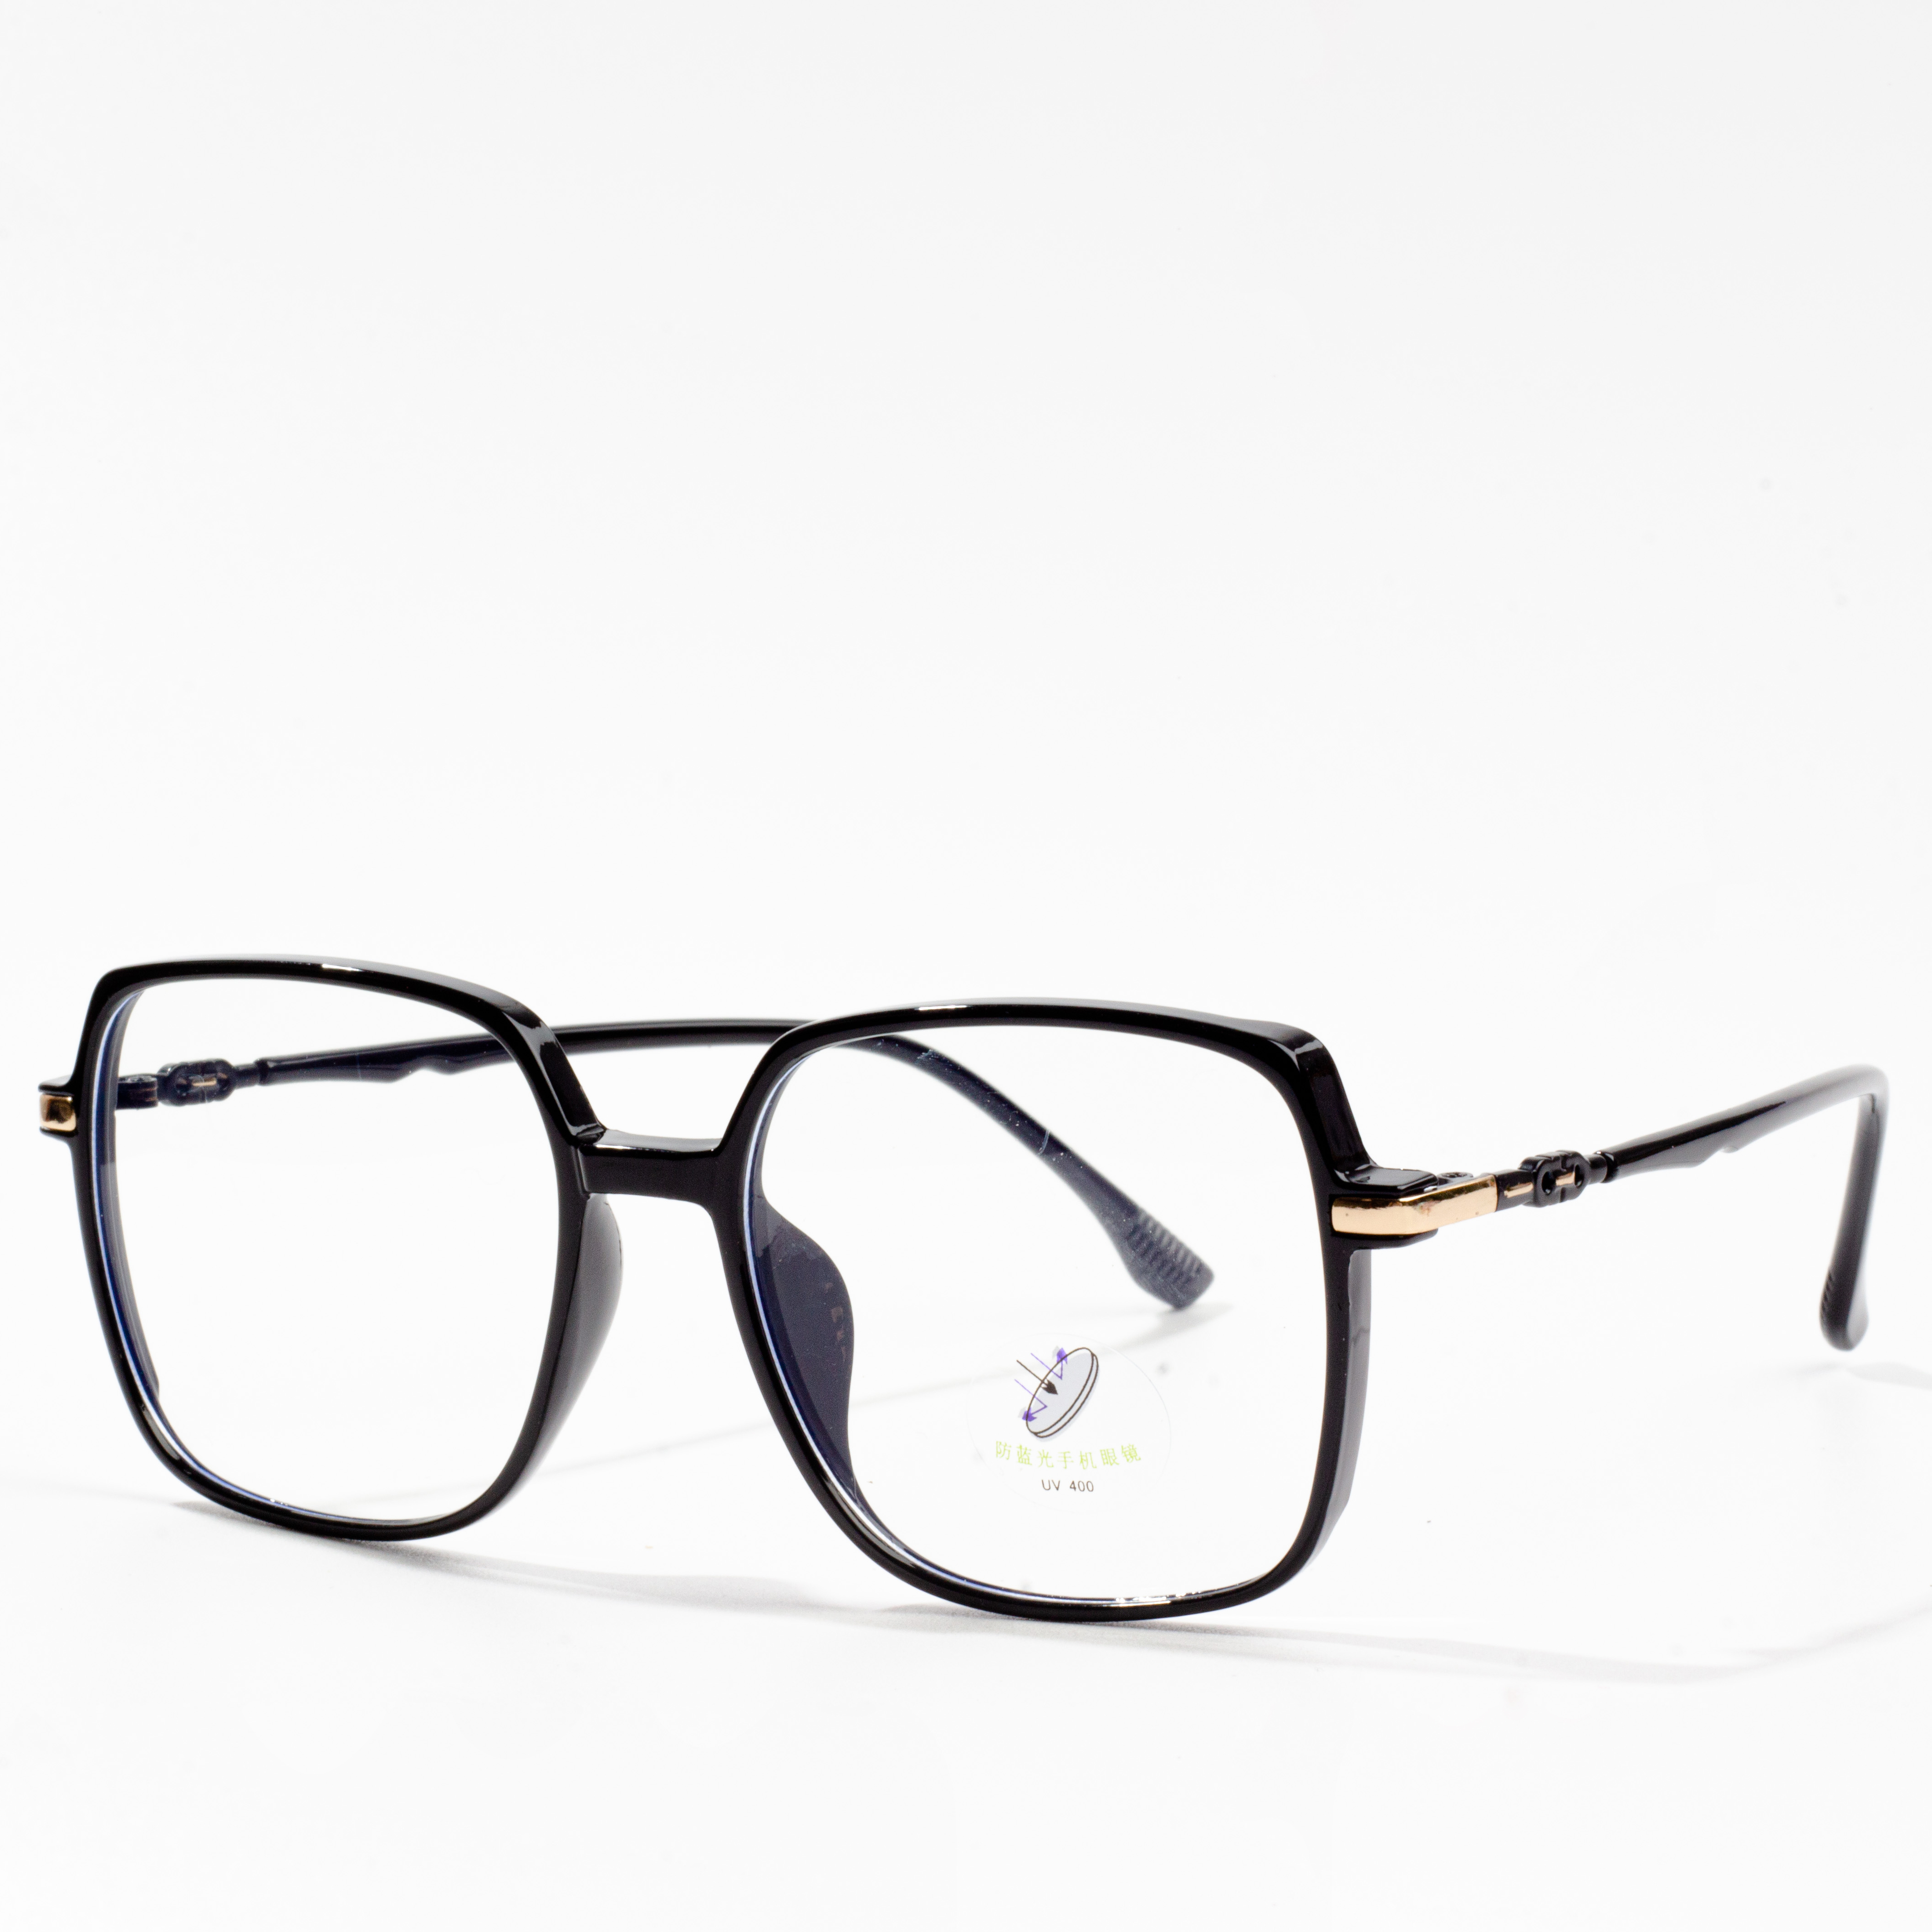 fjouwerkante bril frames